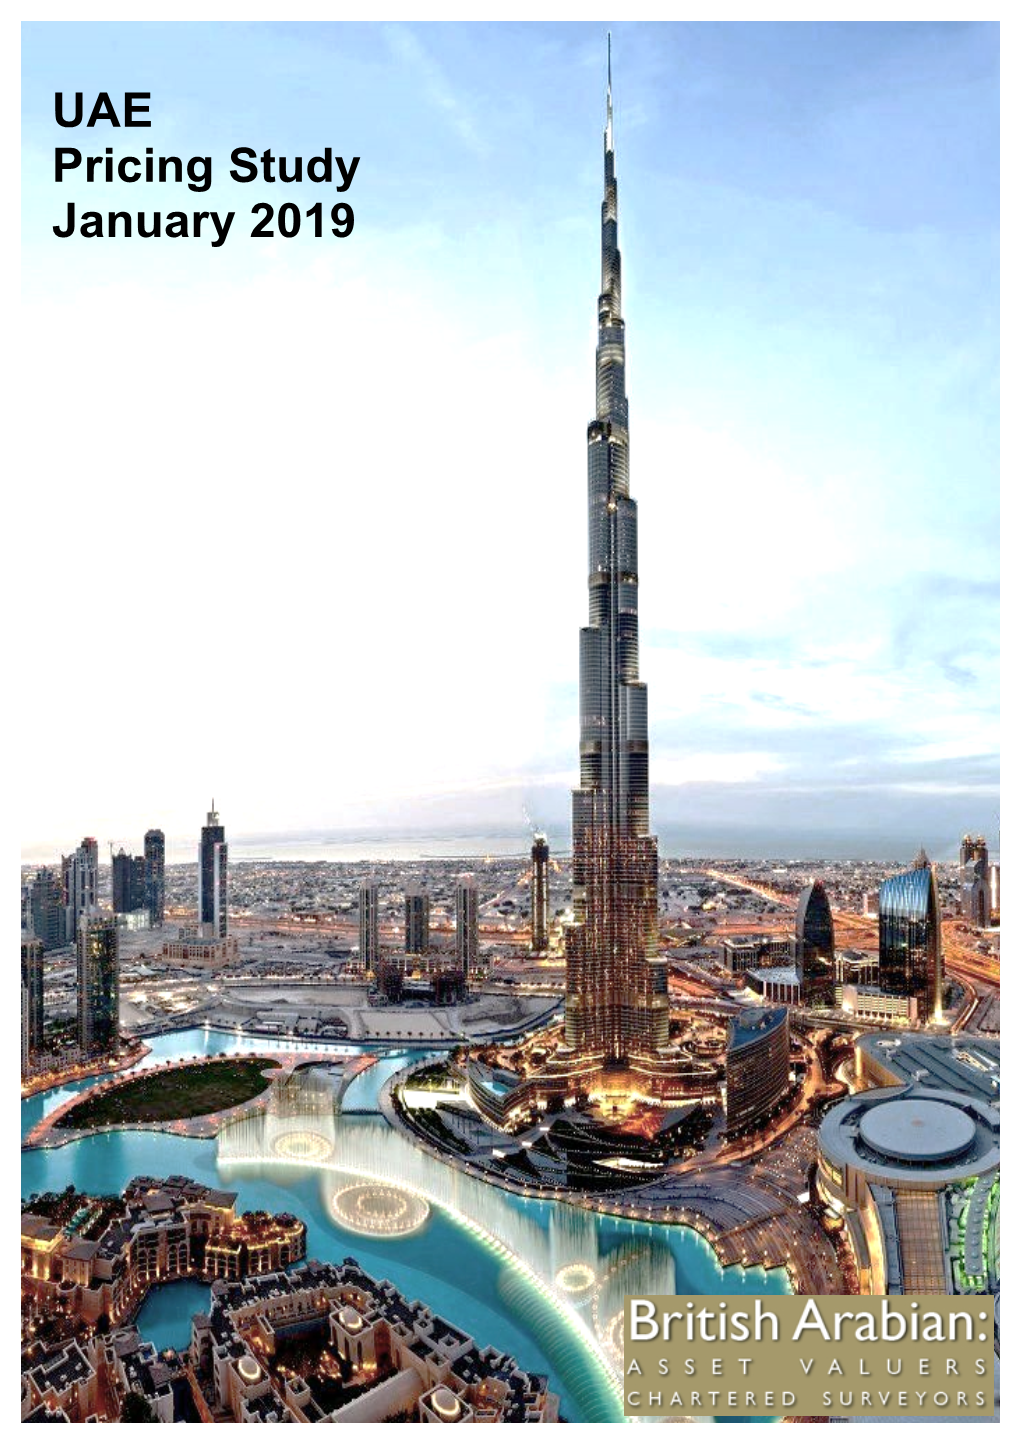 UAE Pricing Study January 2019